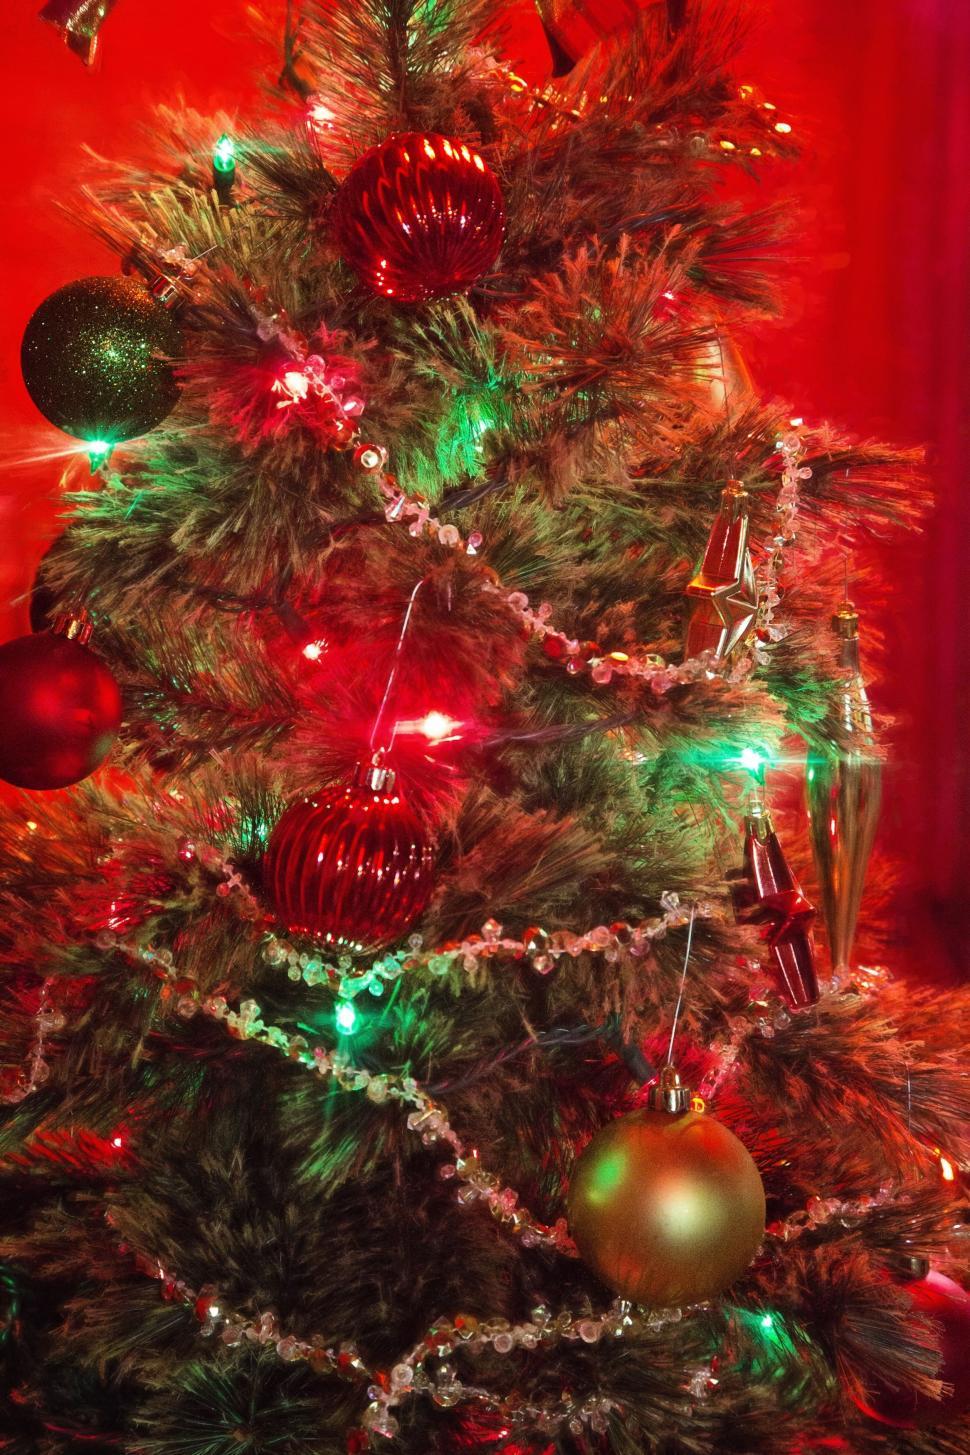 Free Image of Christmas tree 